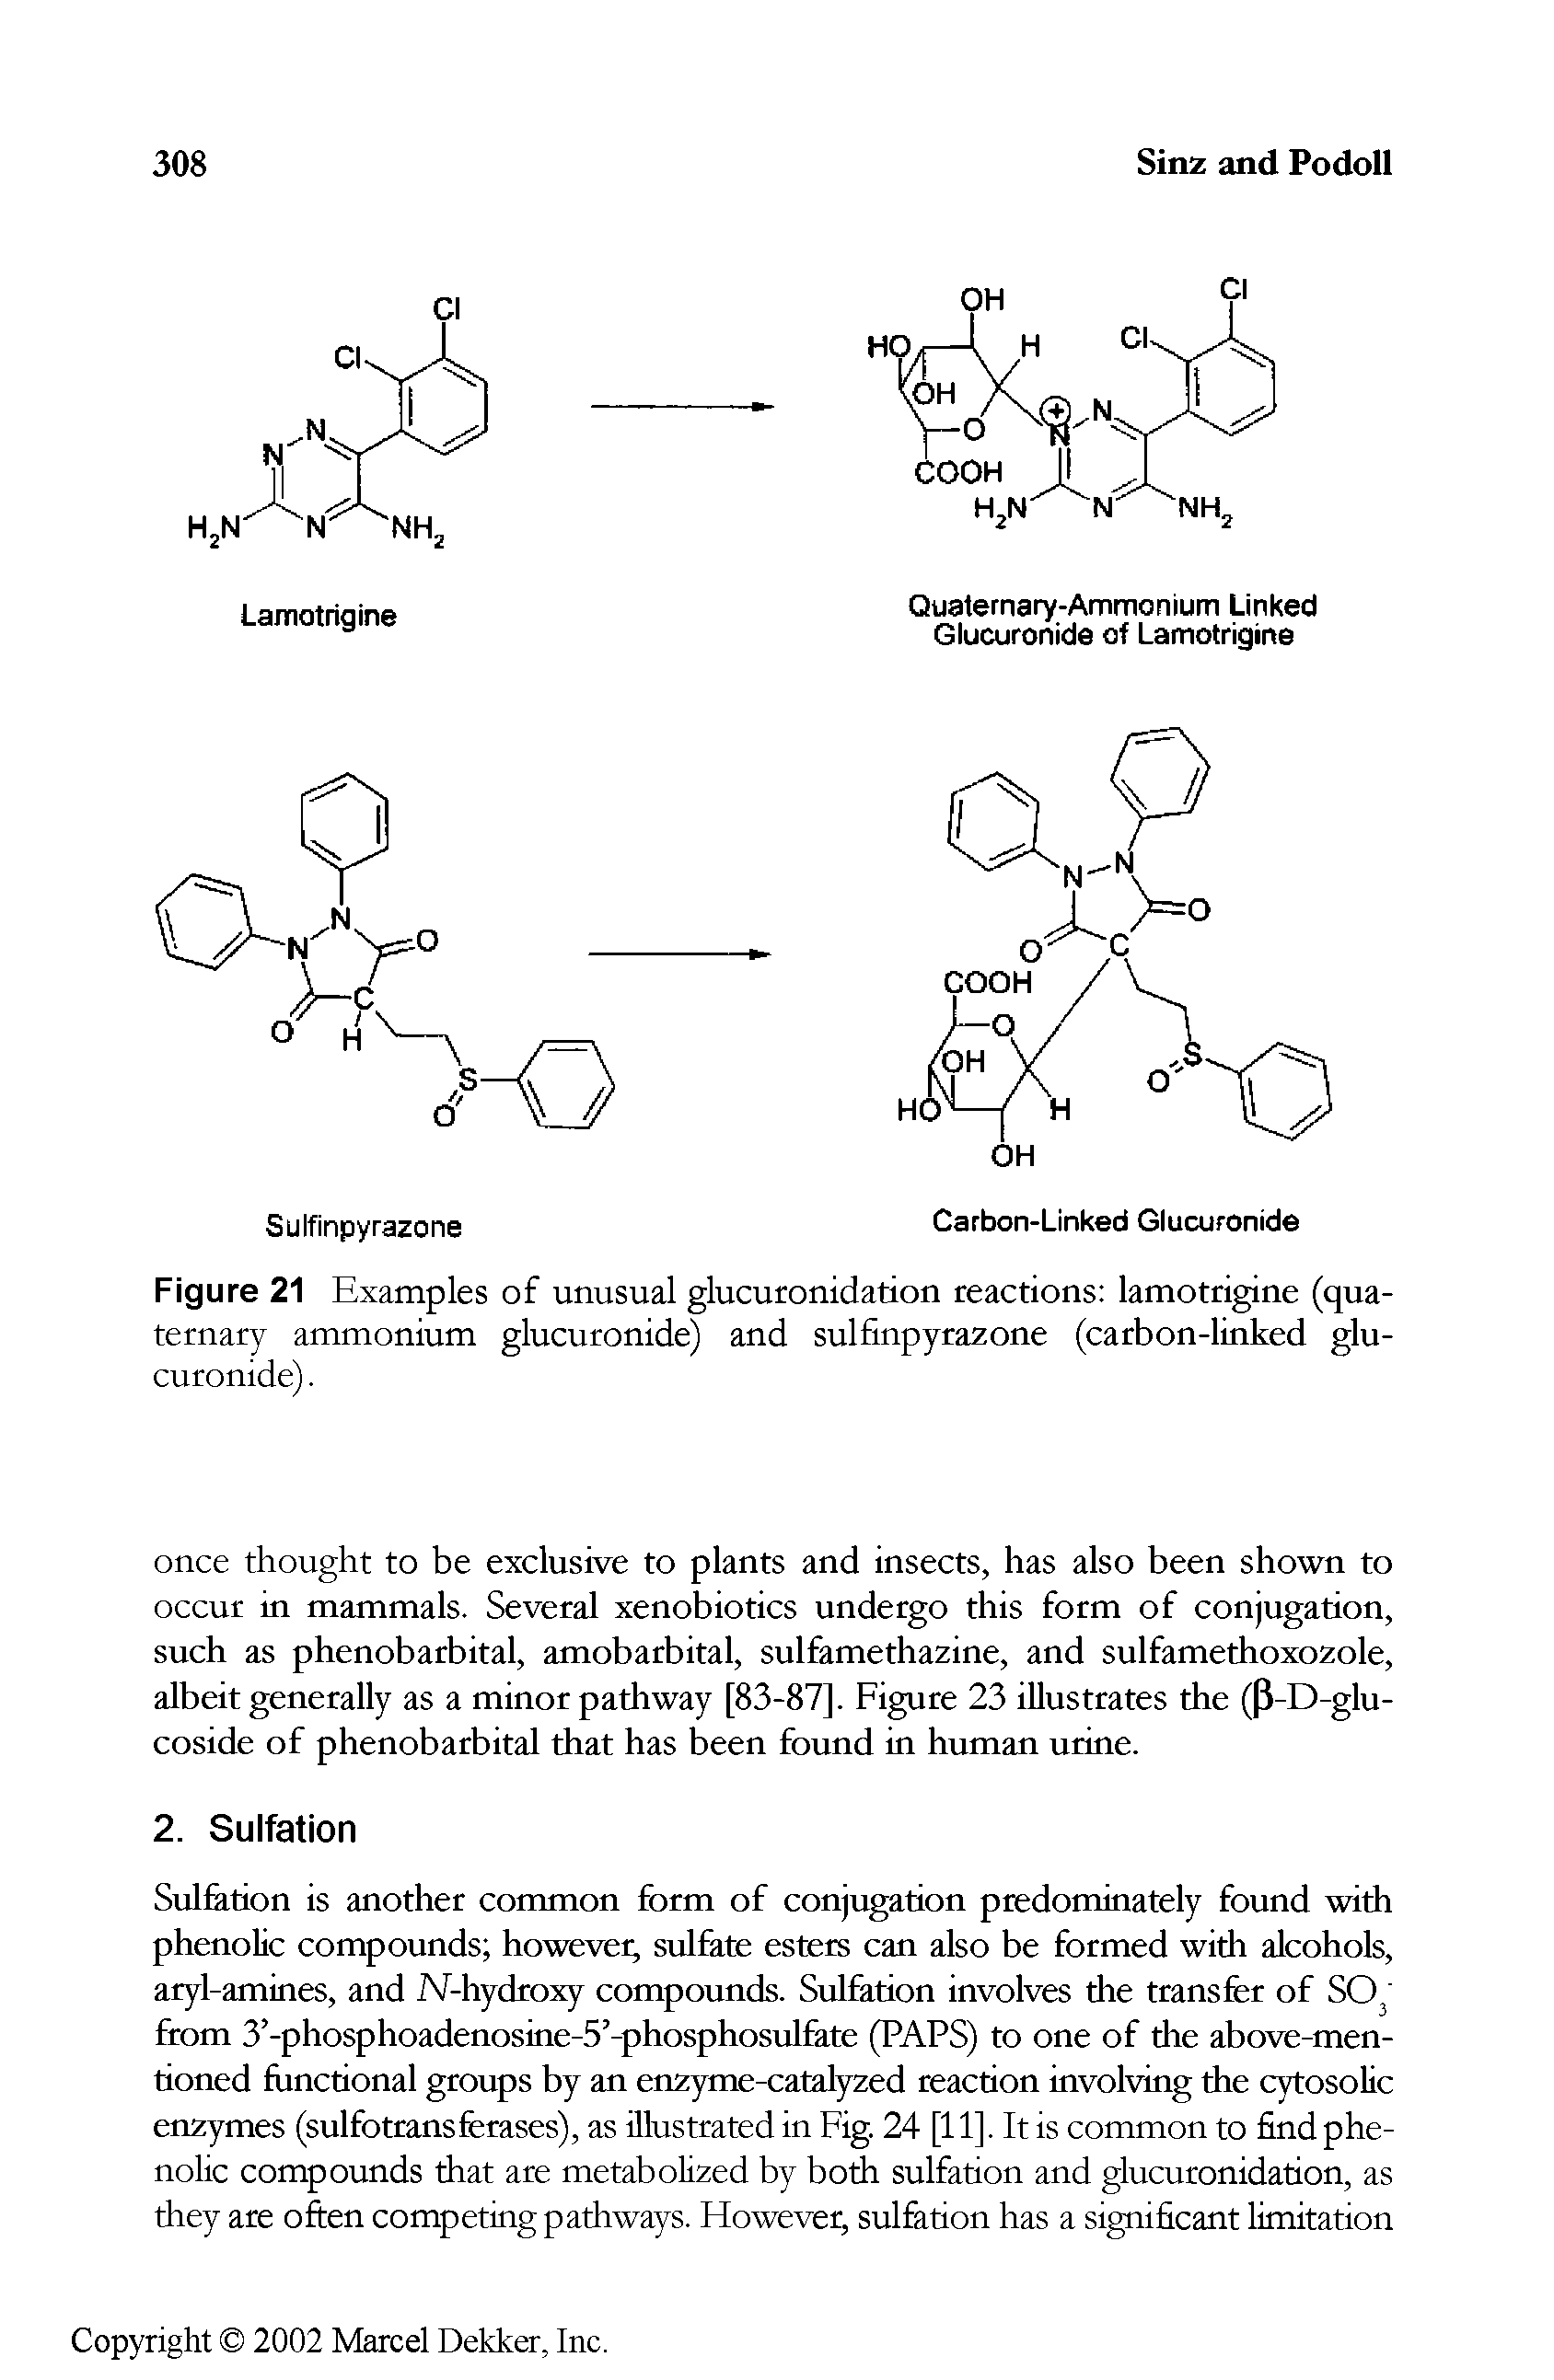 Figure 21 Examples of unusual glucuronidation reactions lamotrigine (quaternary ammonium glucuronide) and sulfinpyrazone (carbon-linked glucuronide). ...